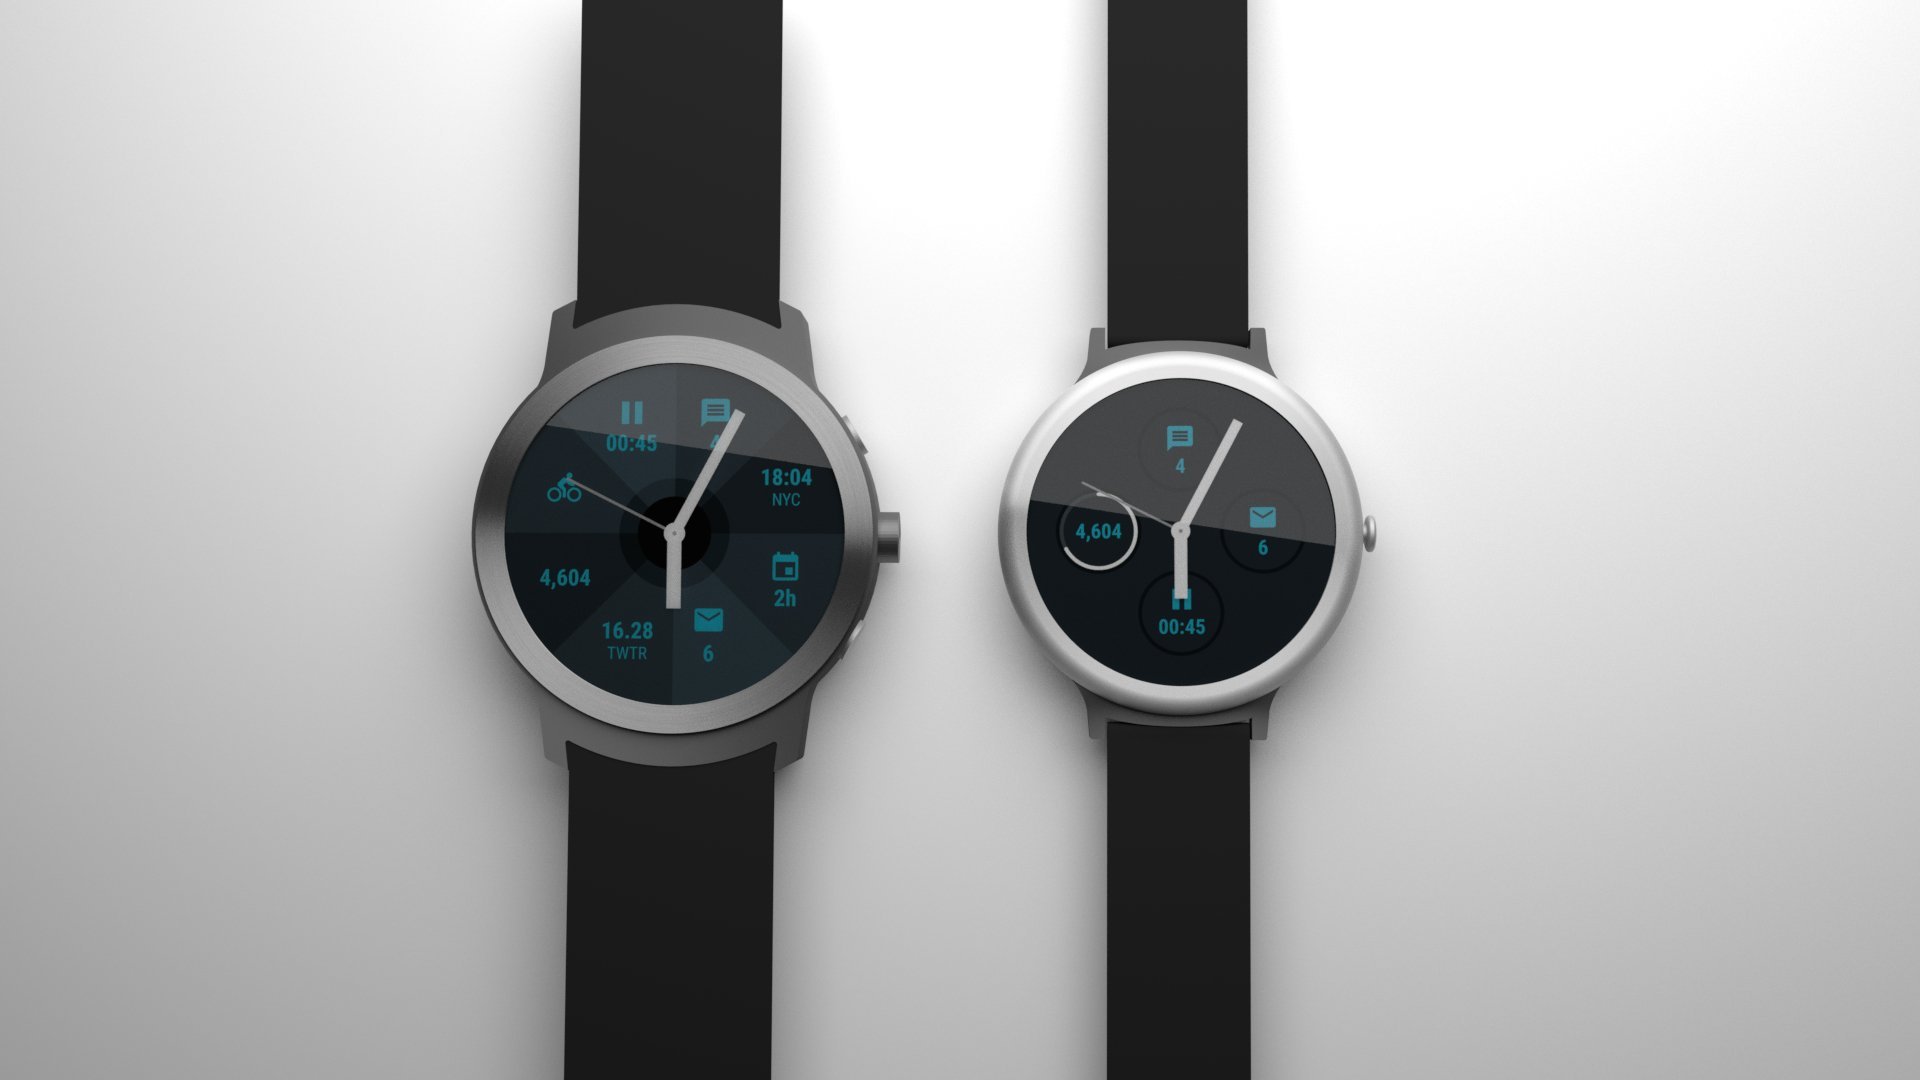 Android Wear 2.0 debutará con LG Watch Sport y Watch Style